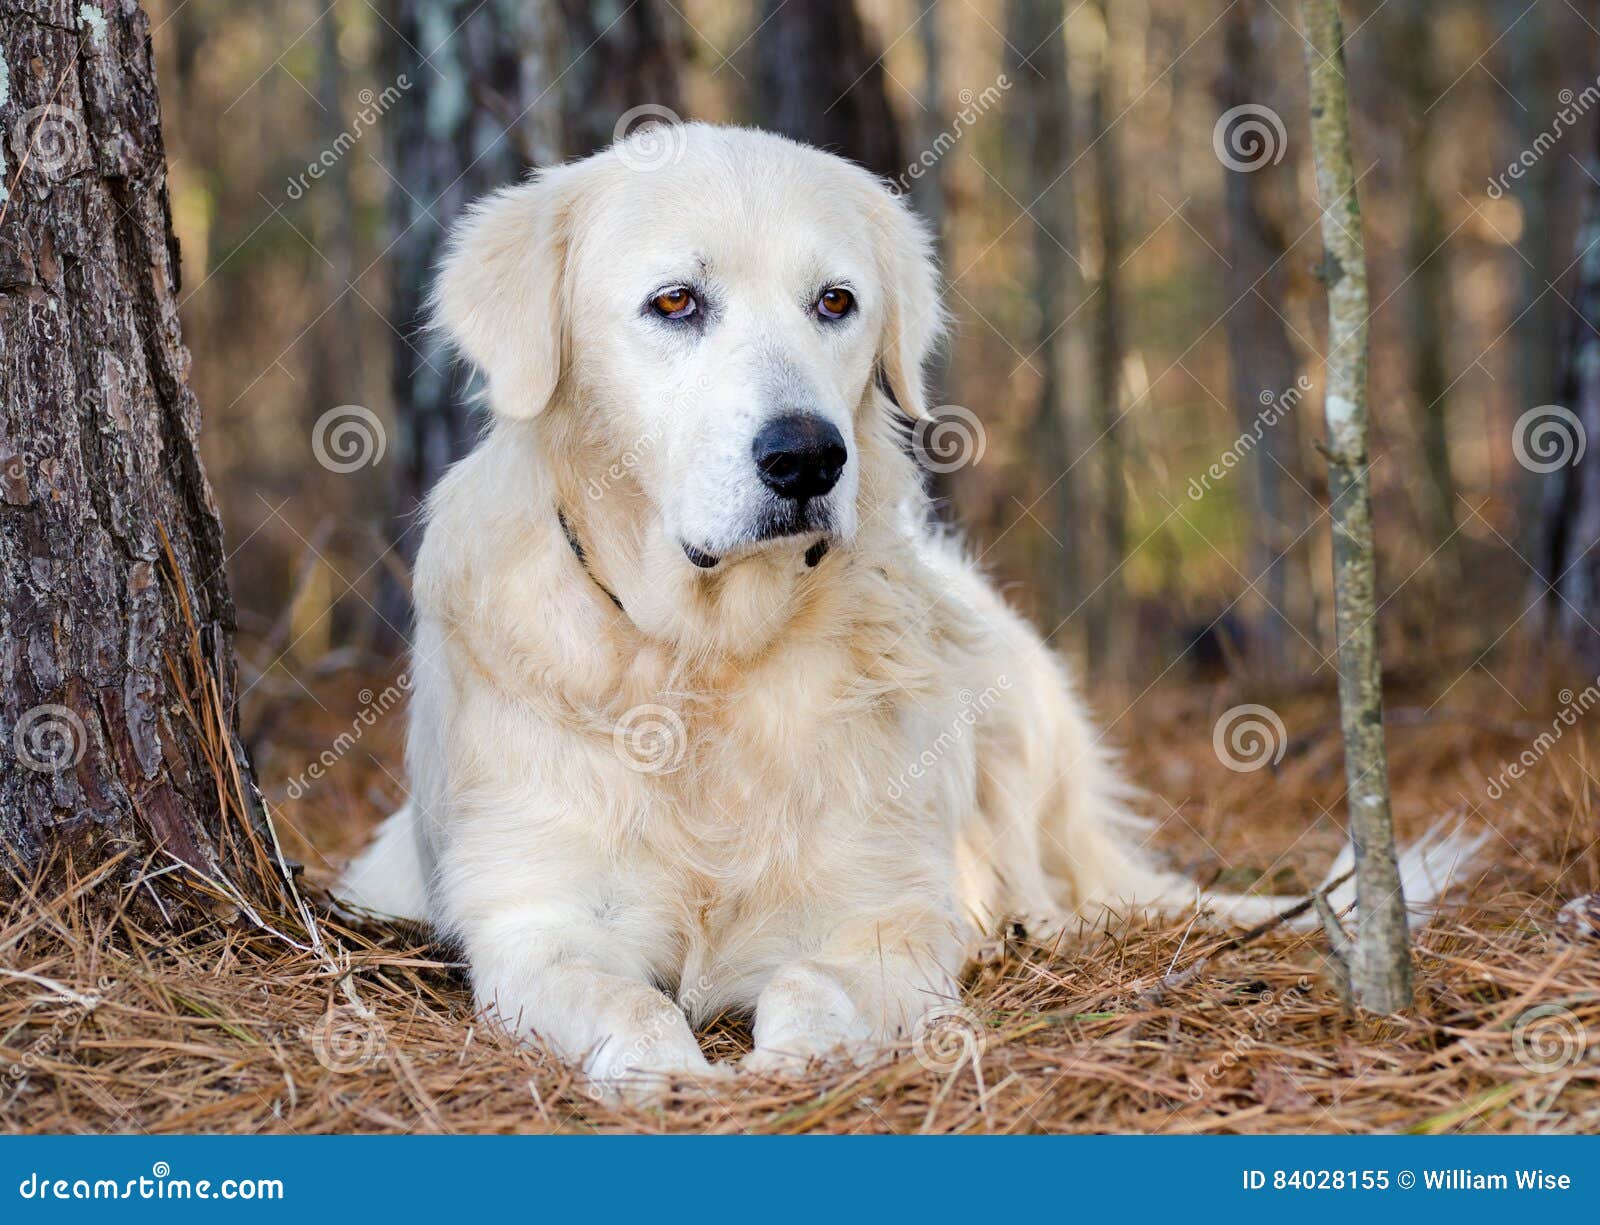 Great Pyrenees Livestock Guardian Dog Stock Image Image Of Eyes Bulldog 84028155